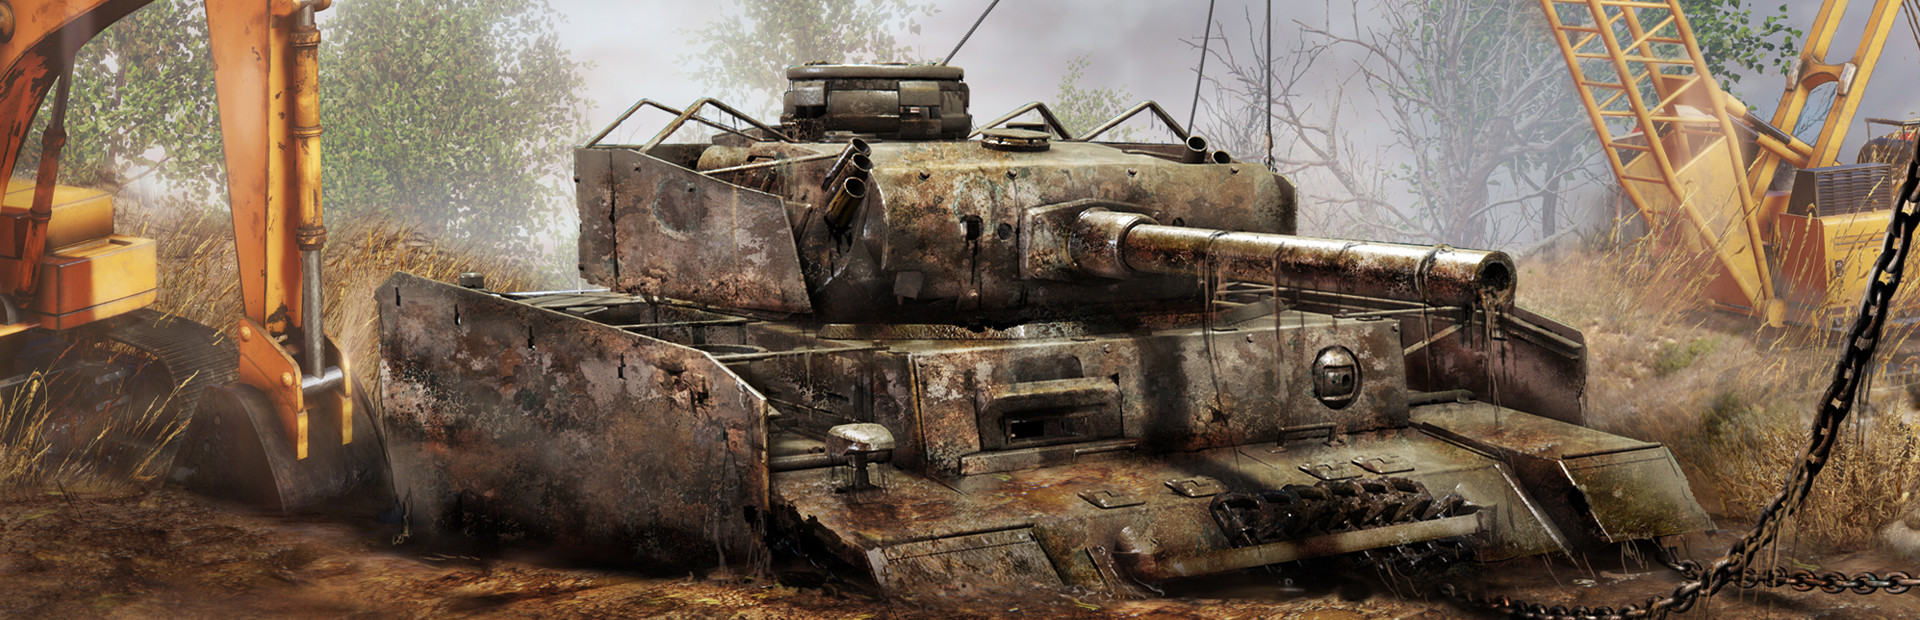 Tank Mechanic Simulator cover image